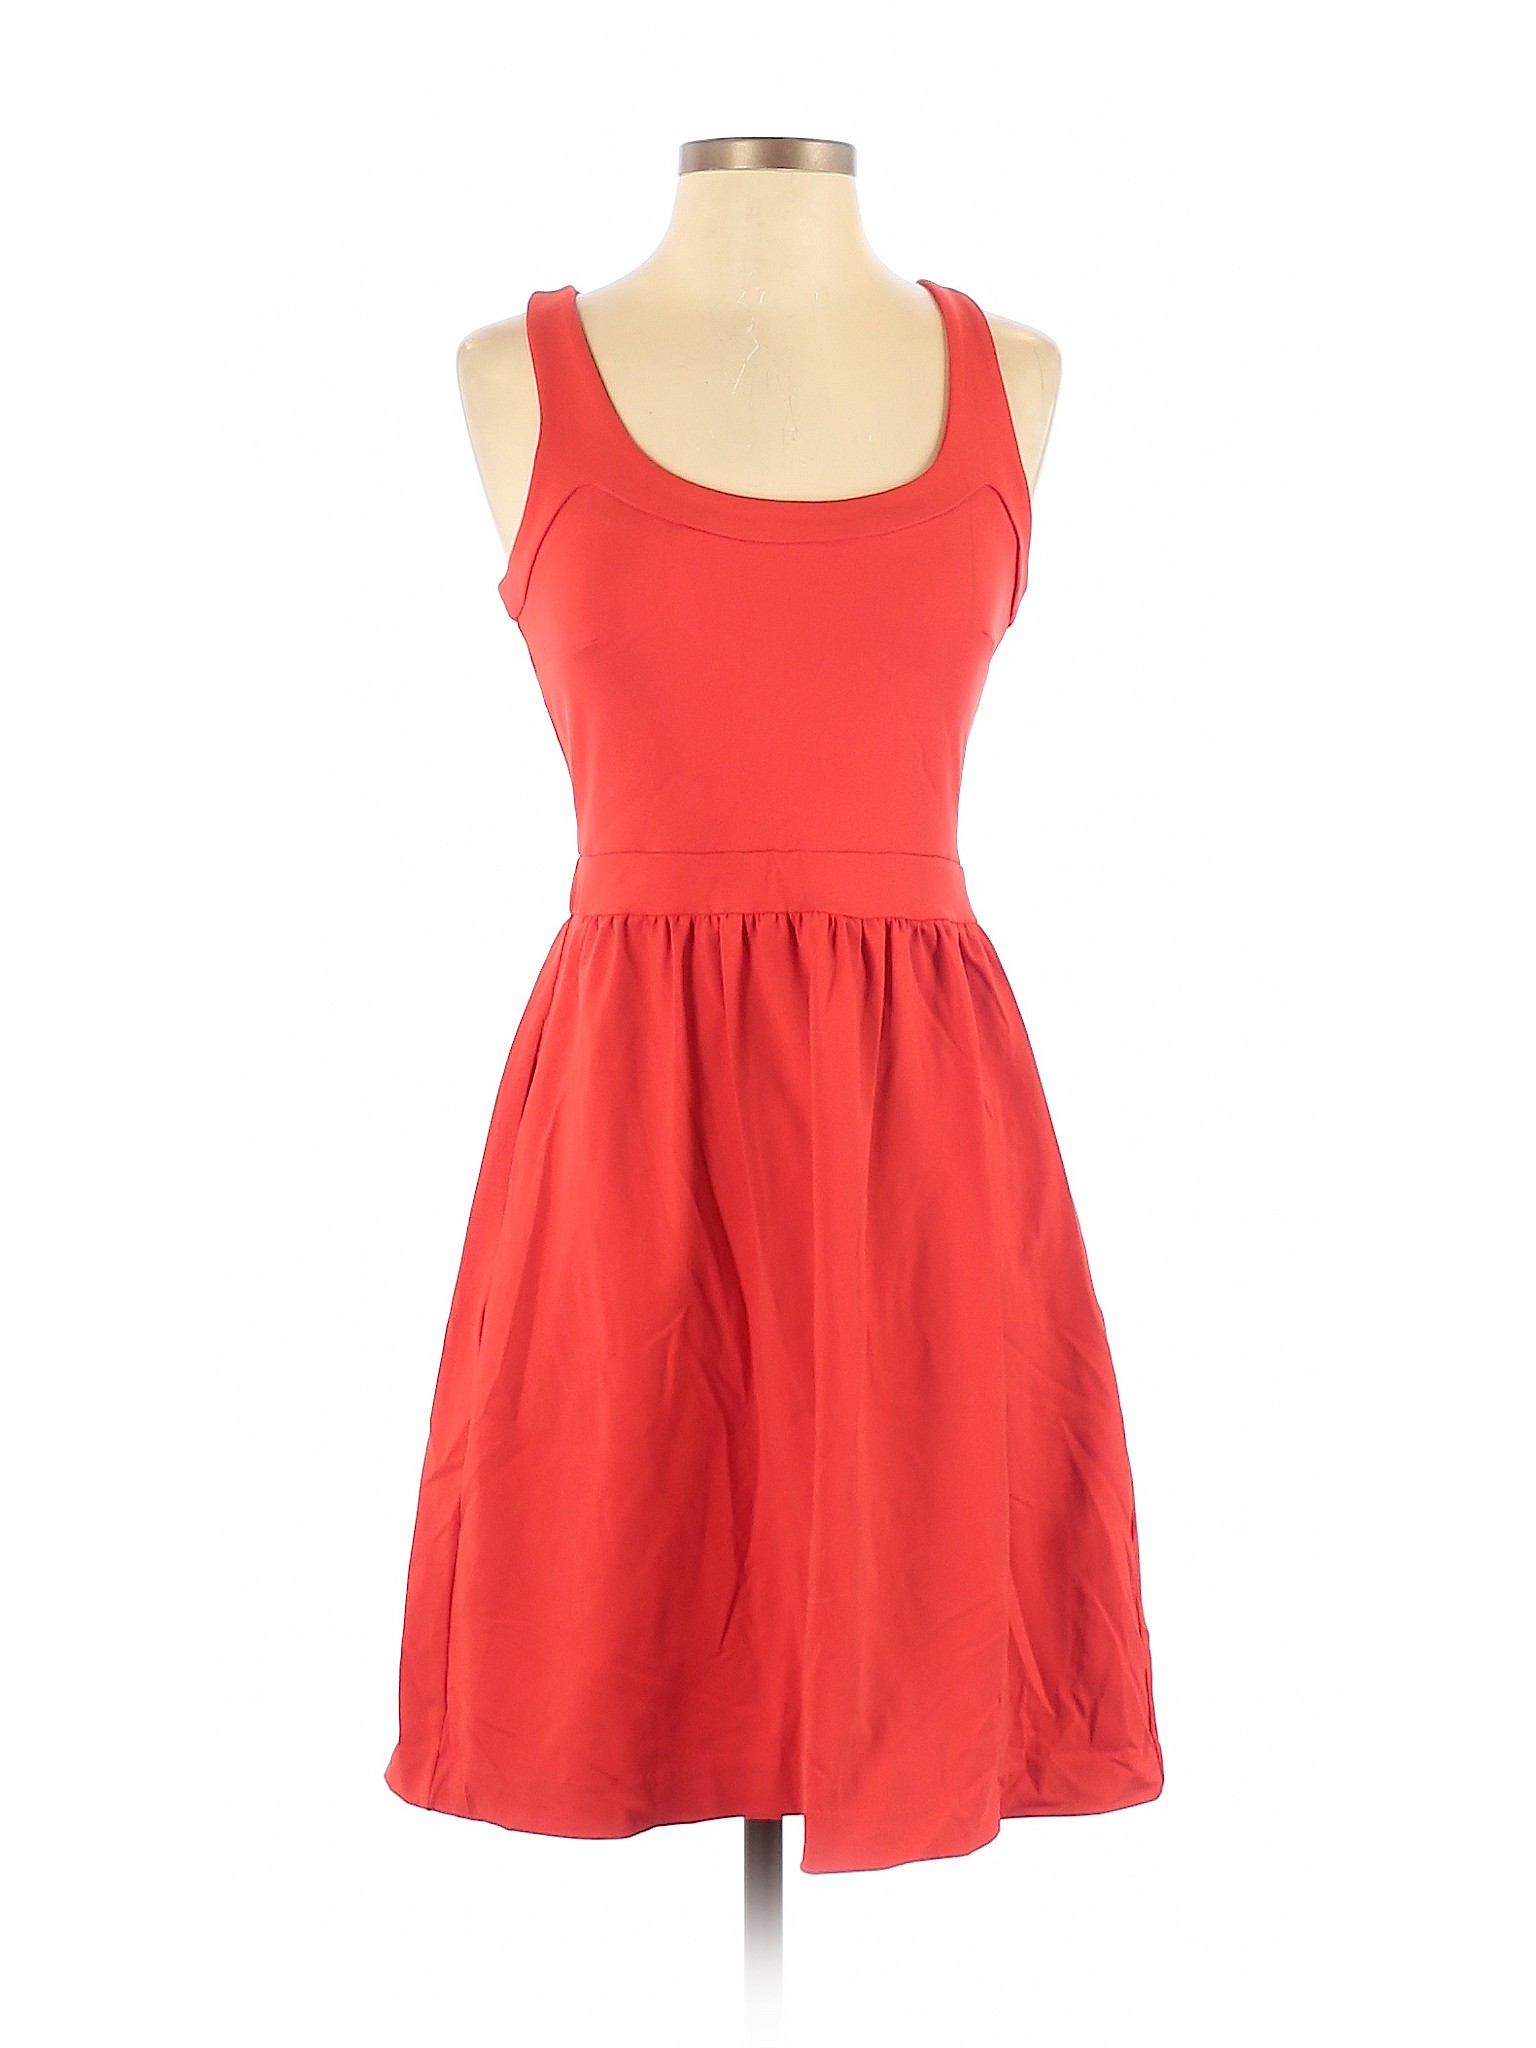 Cynthia Rowley TJX Women Red Casual Dress S | eBay